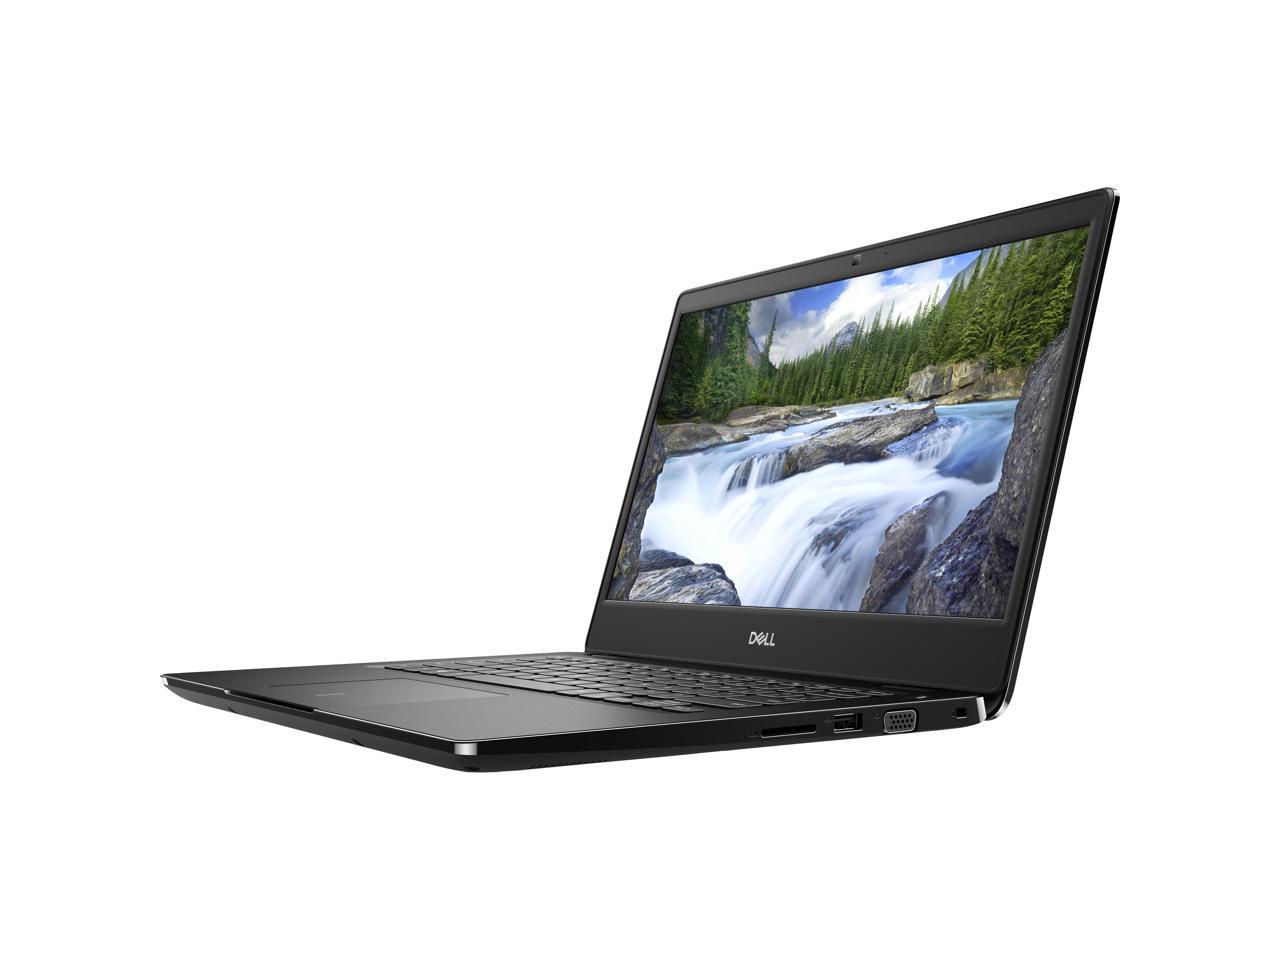 DELL Laptop Latitude 3400 PT7PN Intel Core i5 8th Gen 8265U (1.60 GHz) 8 GB Memory 256 GB SSD Intel UHD Graphics 620 14.0" Windows 10 Pro 64-bit